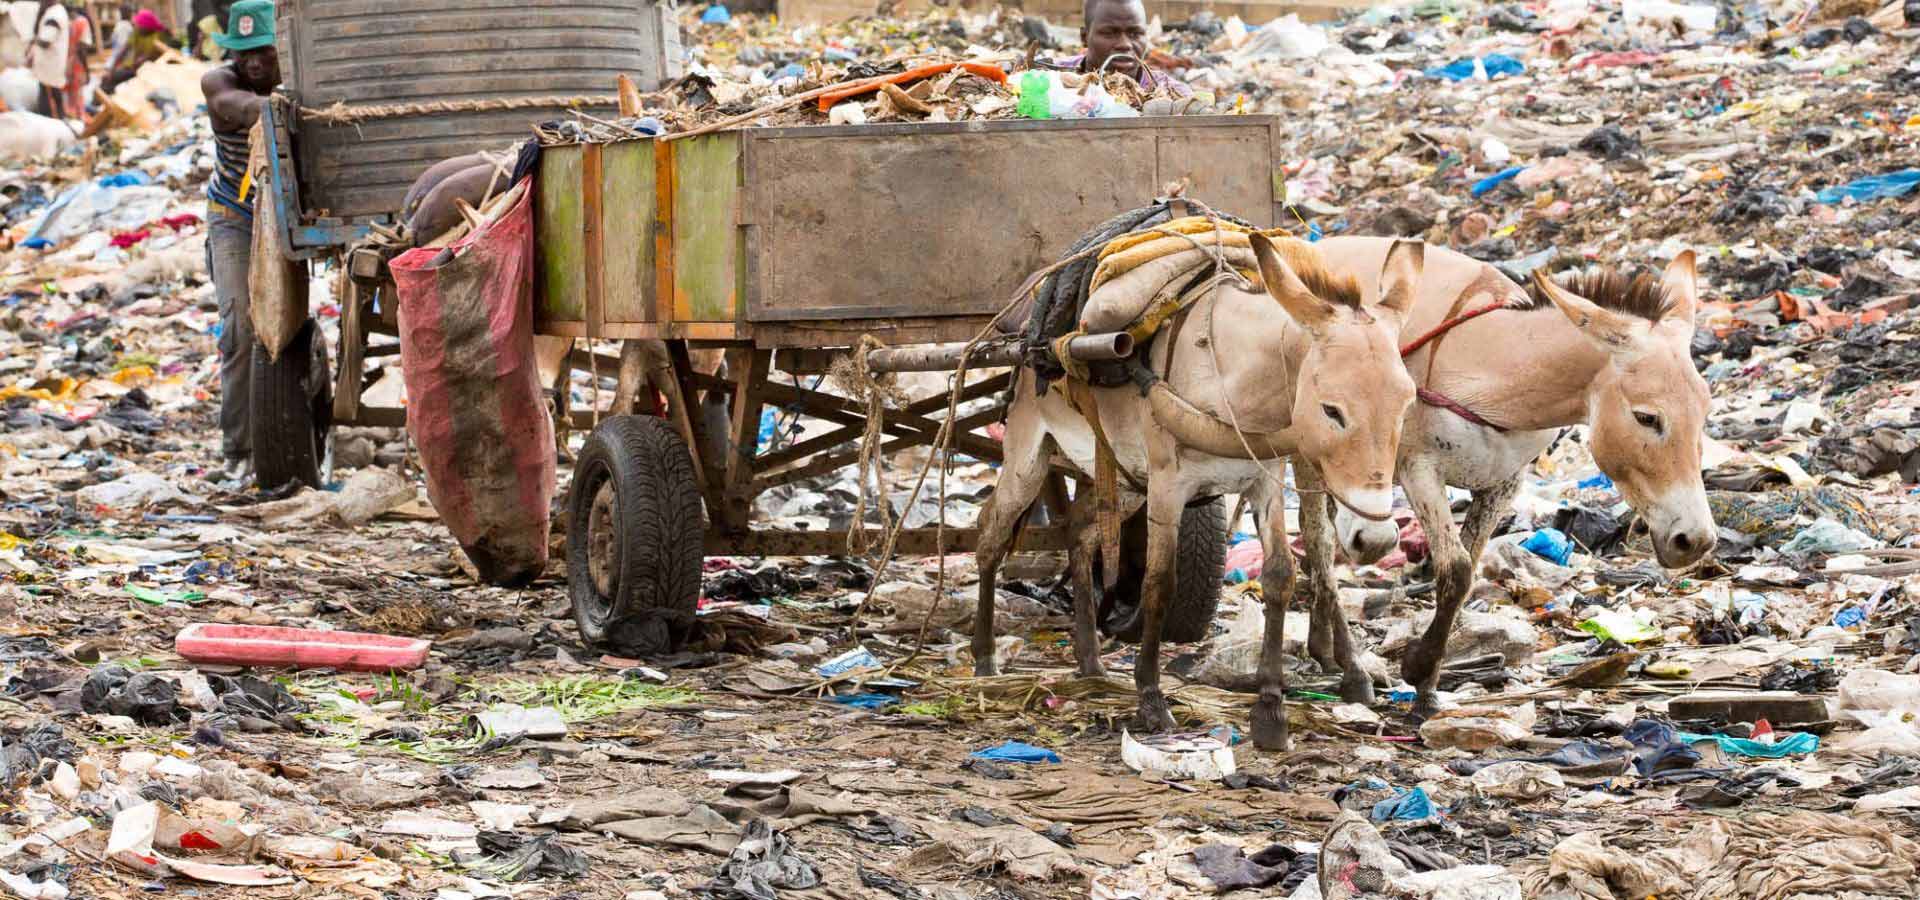 Donkeys pulling cart on rubbish dump